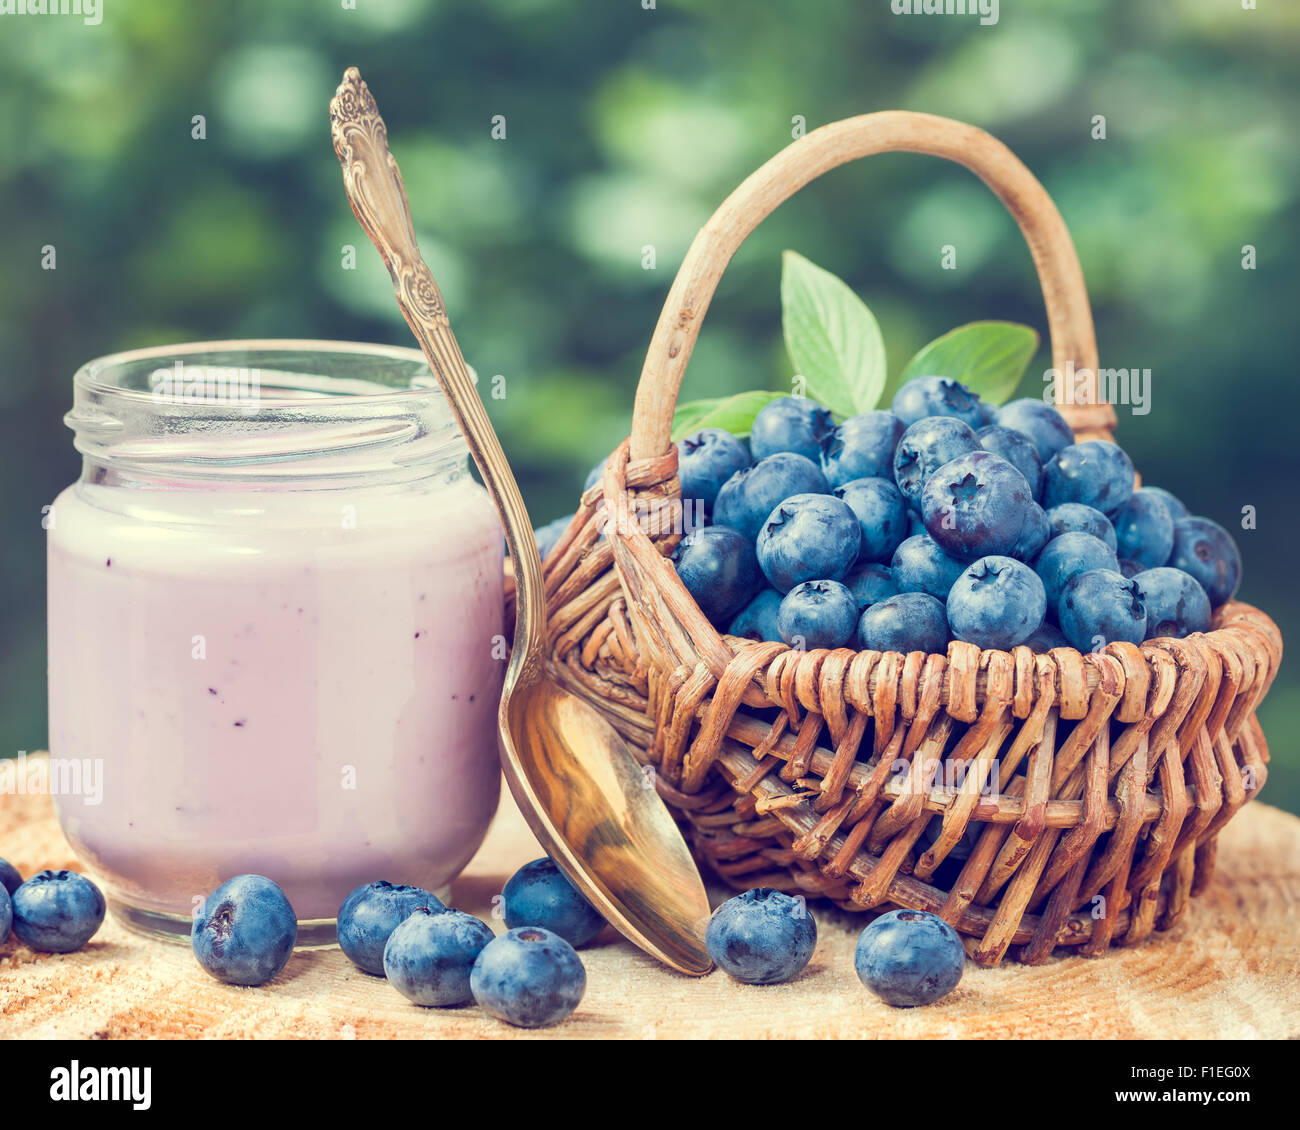 Fresh blueberries yogurt in glass jar and wicker basket with bilberries. Stock Photo